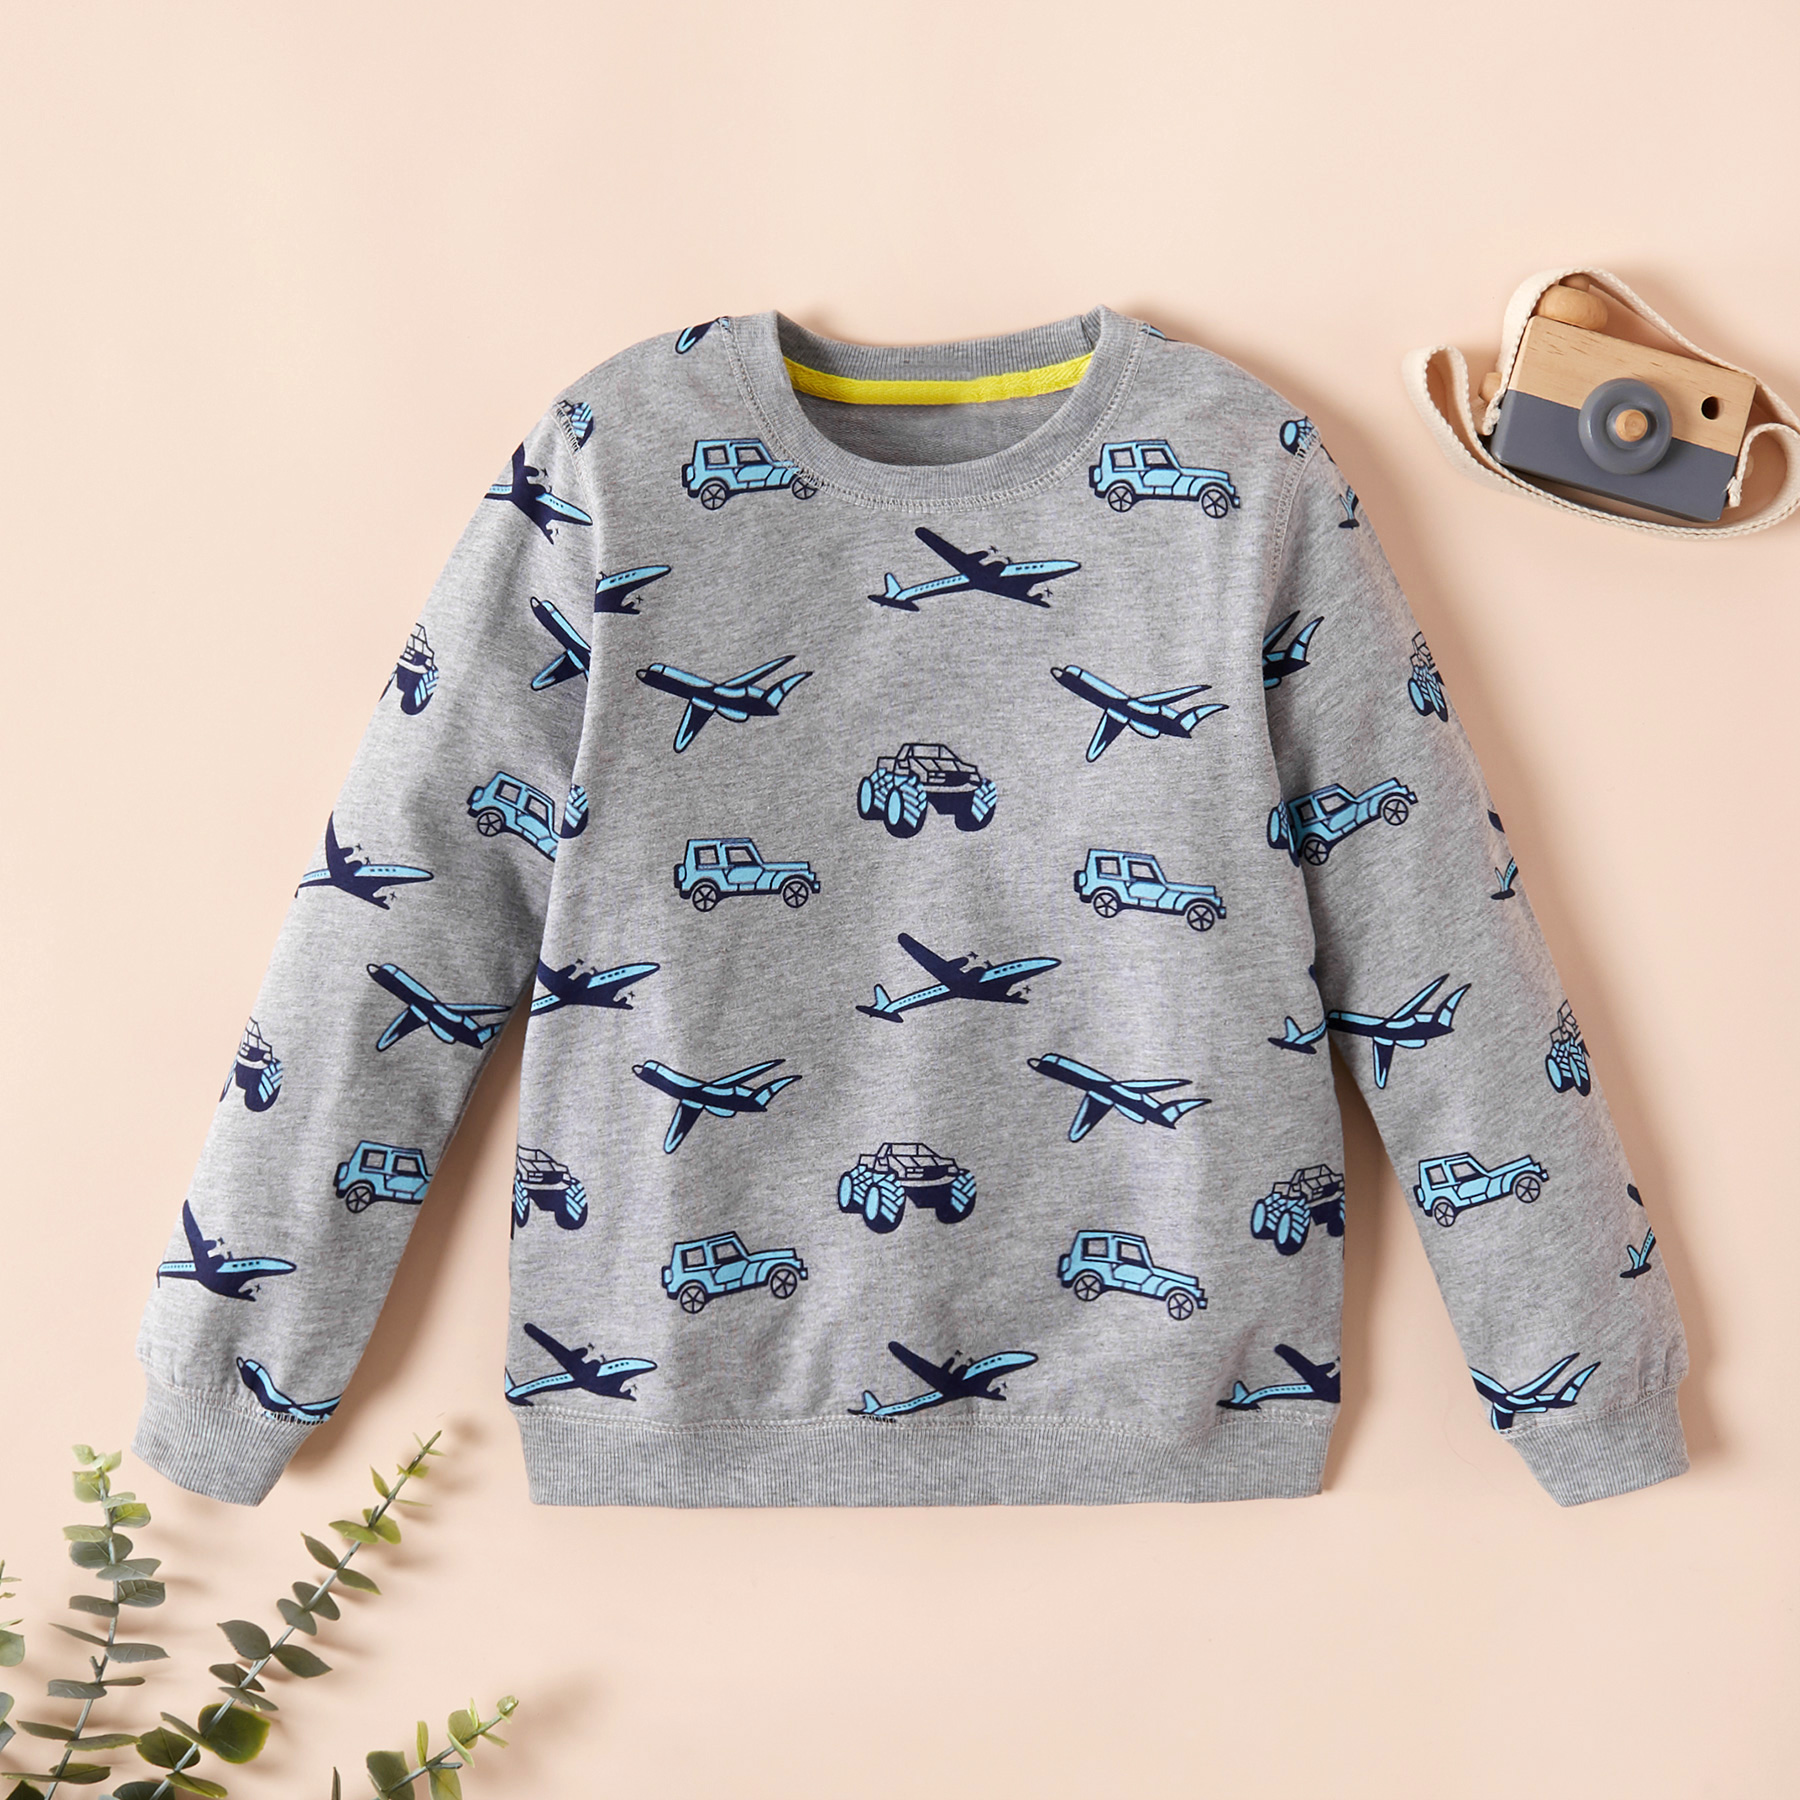 Fashionable Cartoon Car and Plane Allover Print Long-sleeve Sweatershirt